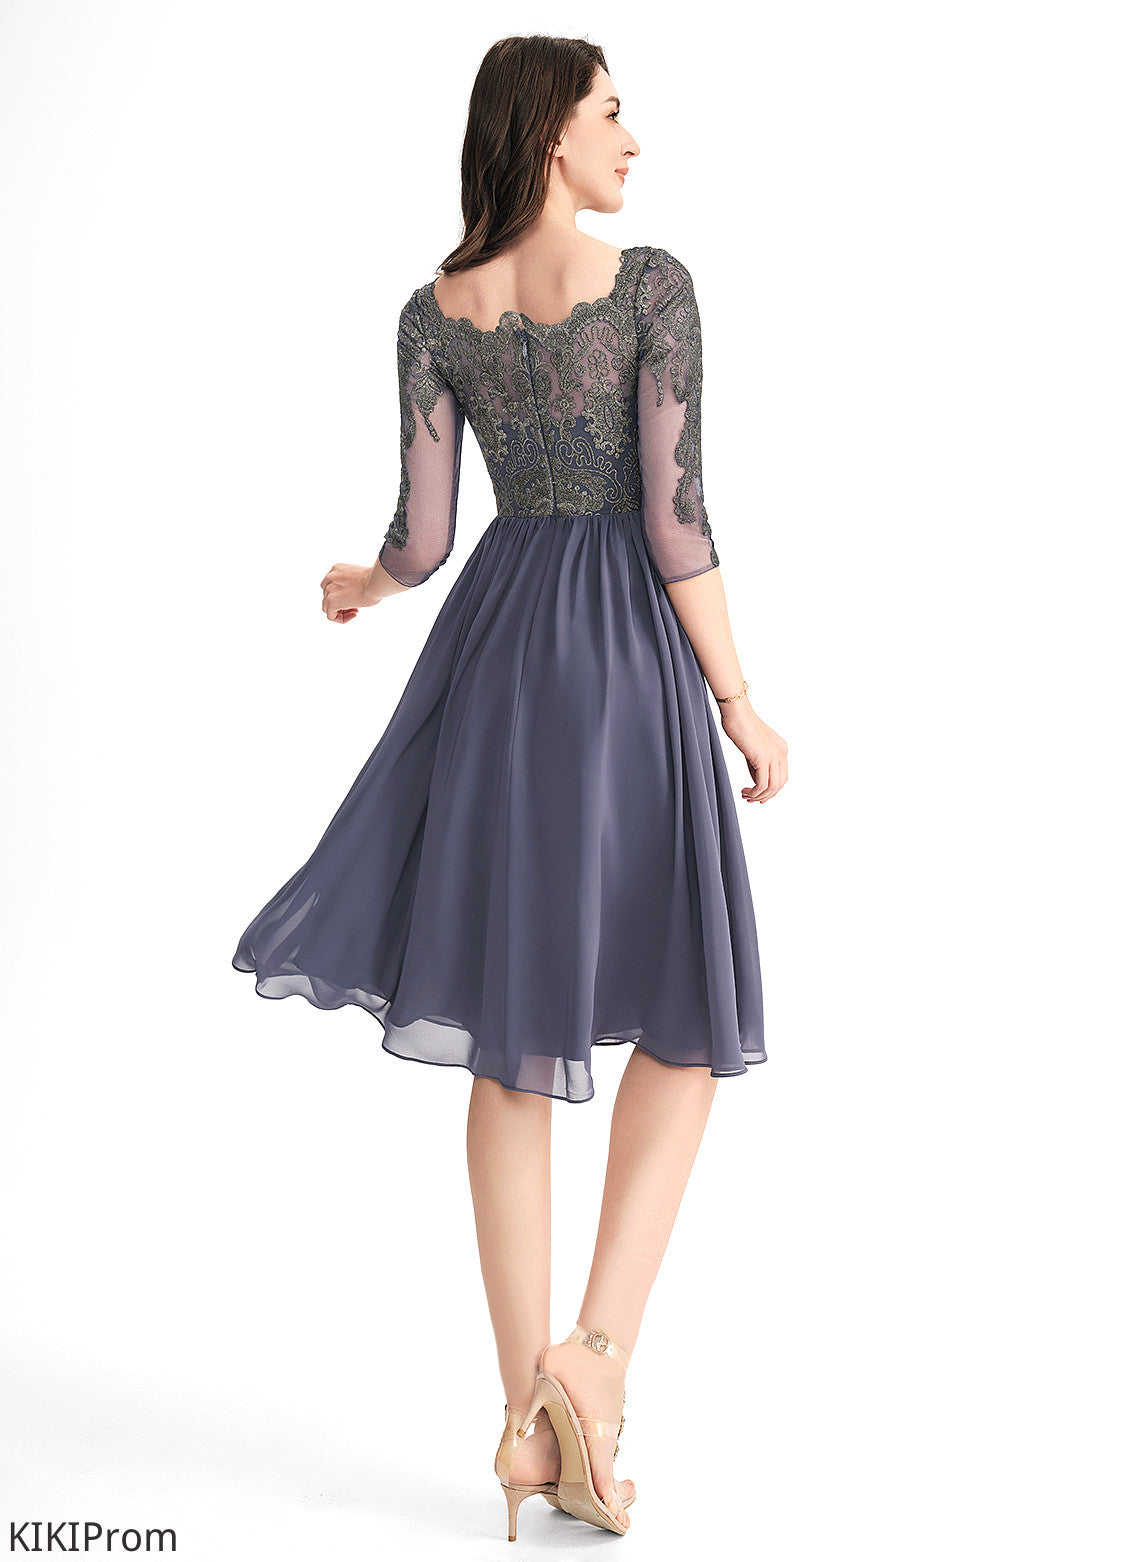 Sierra Knee-Length Lace Lace Chiffon Dress With Cocktail Cocktail Dresses Square Neckline A-Line